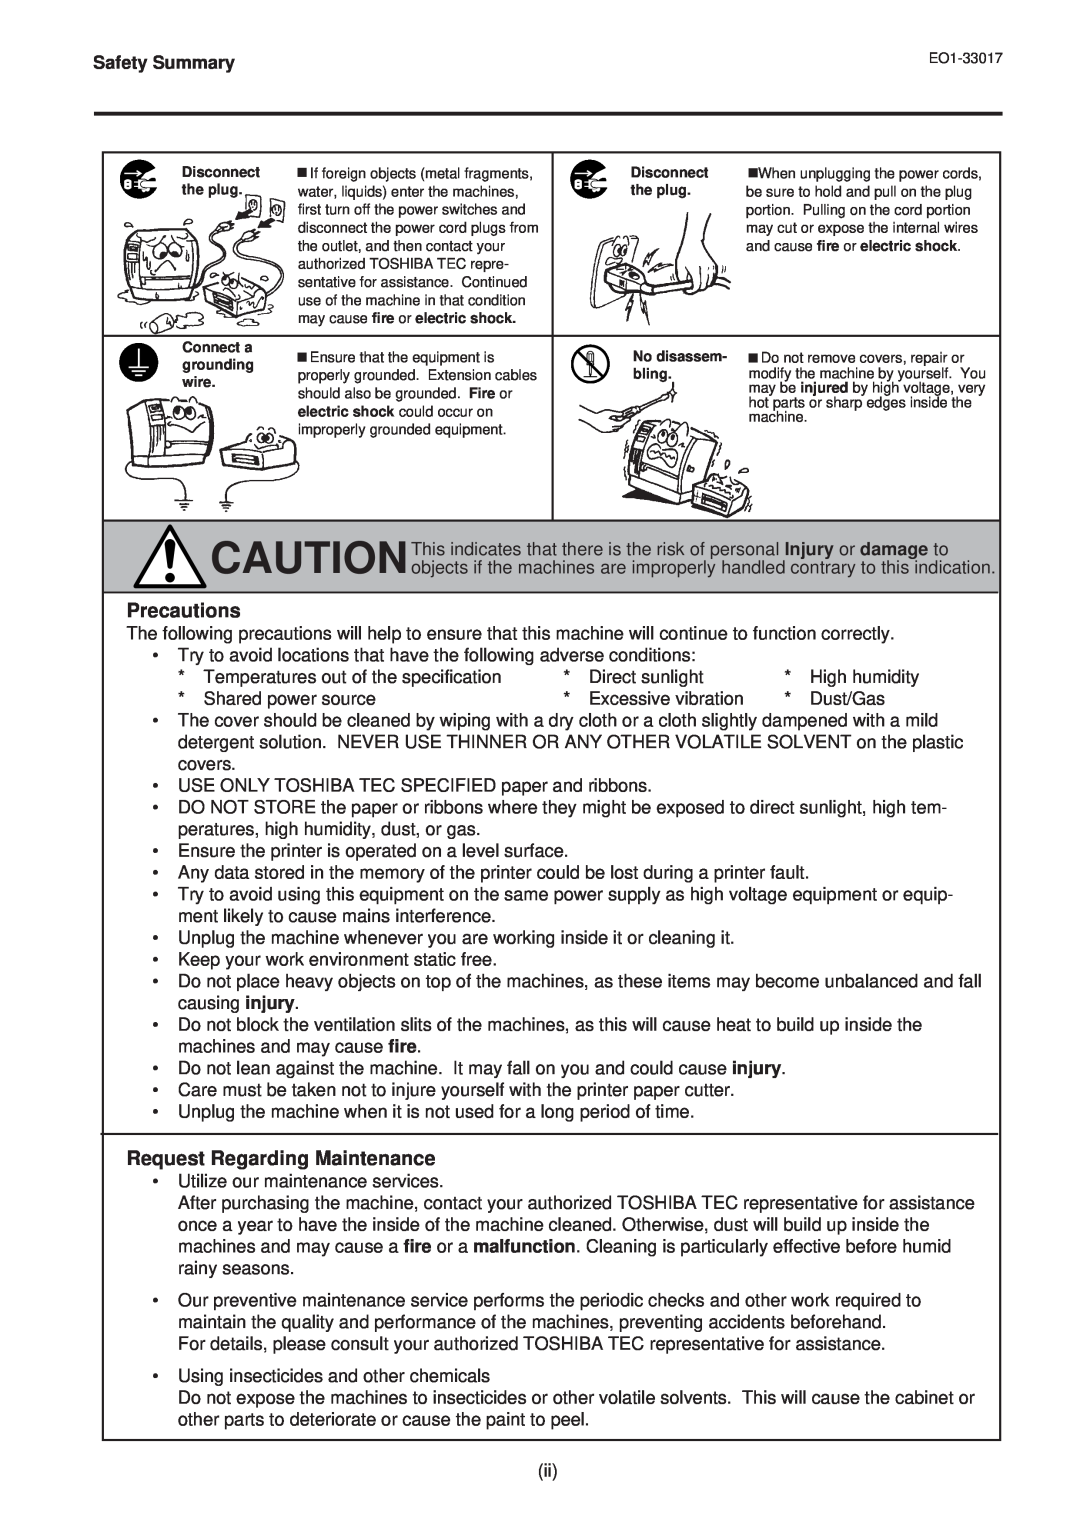 Toshiba B-880-QQ SERIES owner manual Precautions, Request Regarding Maintenance, Safety Summary 